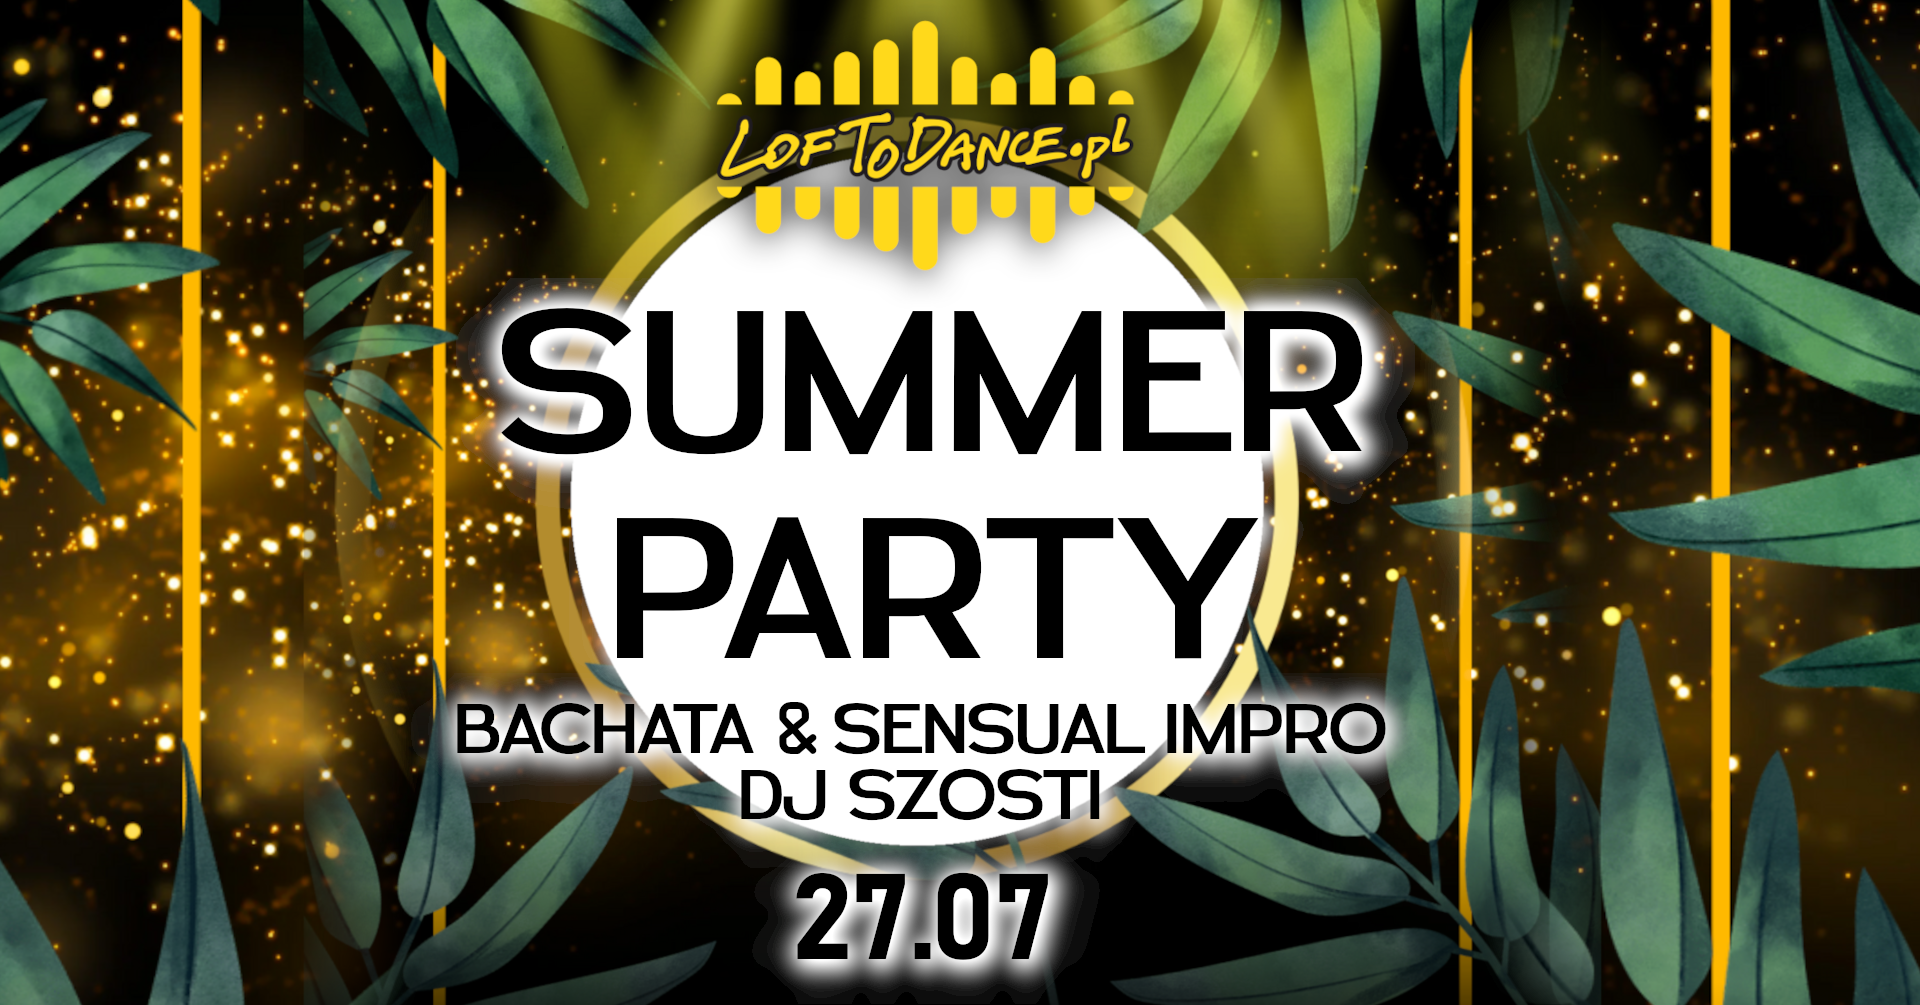 Summer Party - Bachata & Sensual Impro - sklep Loftodance